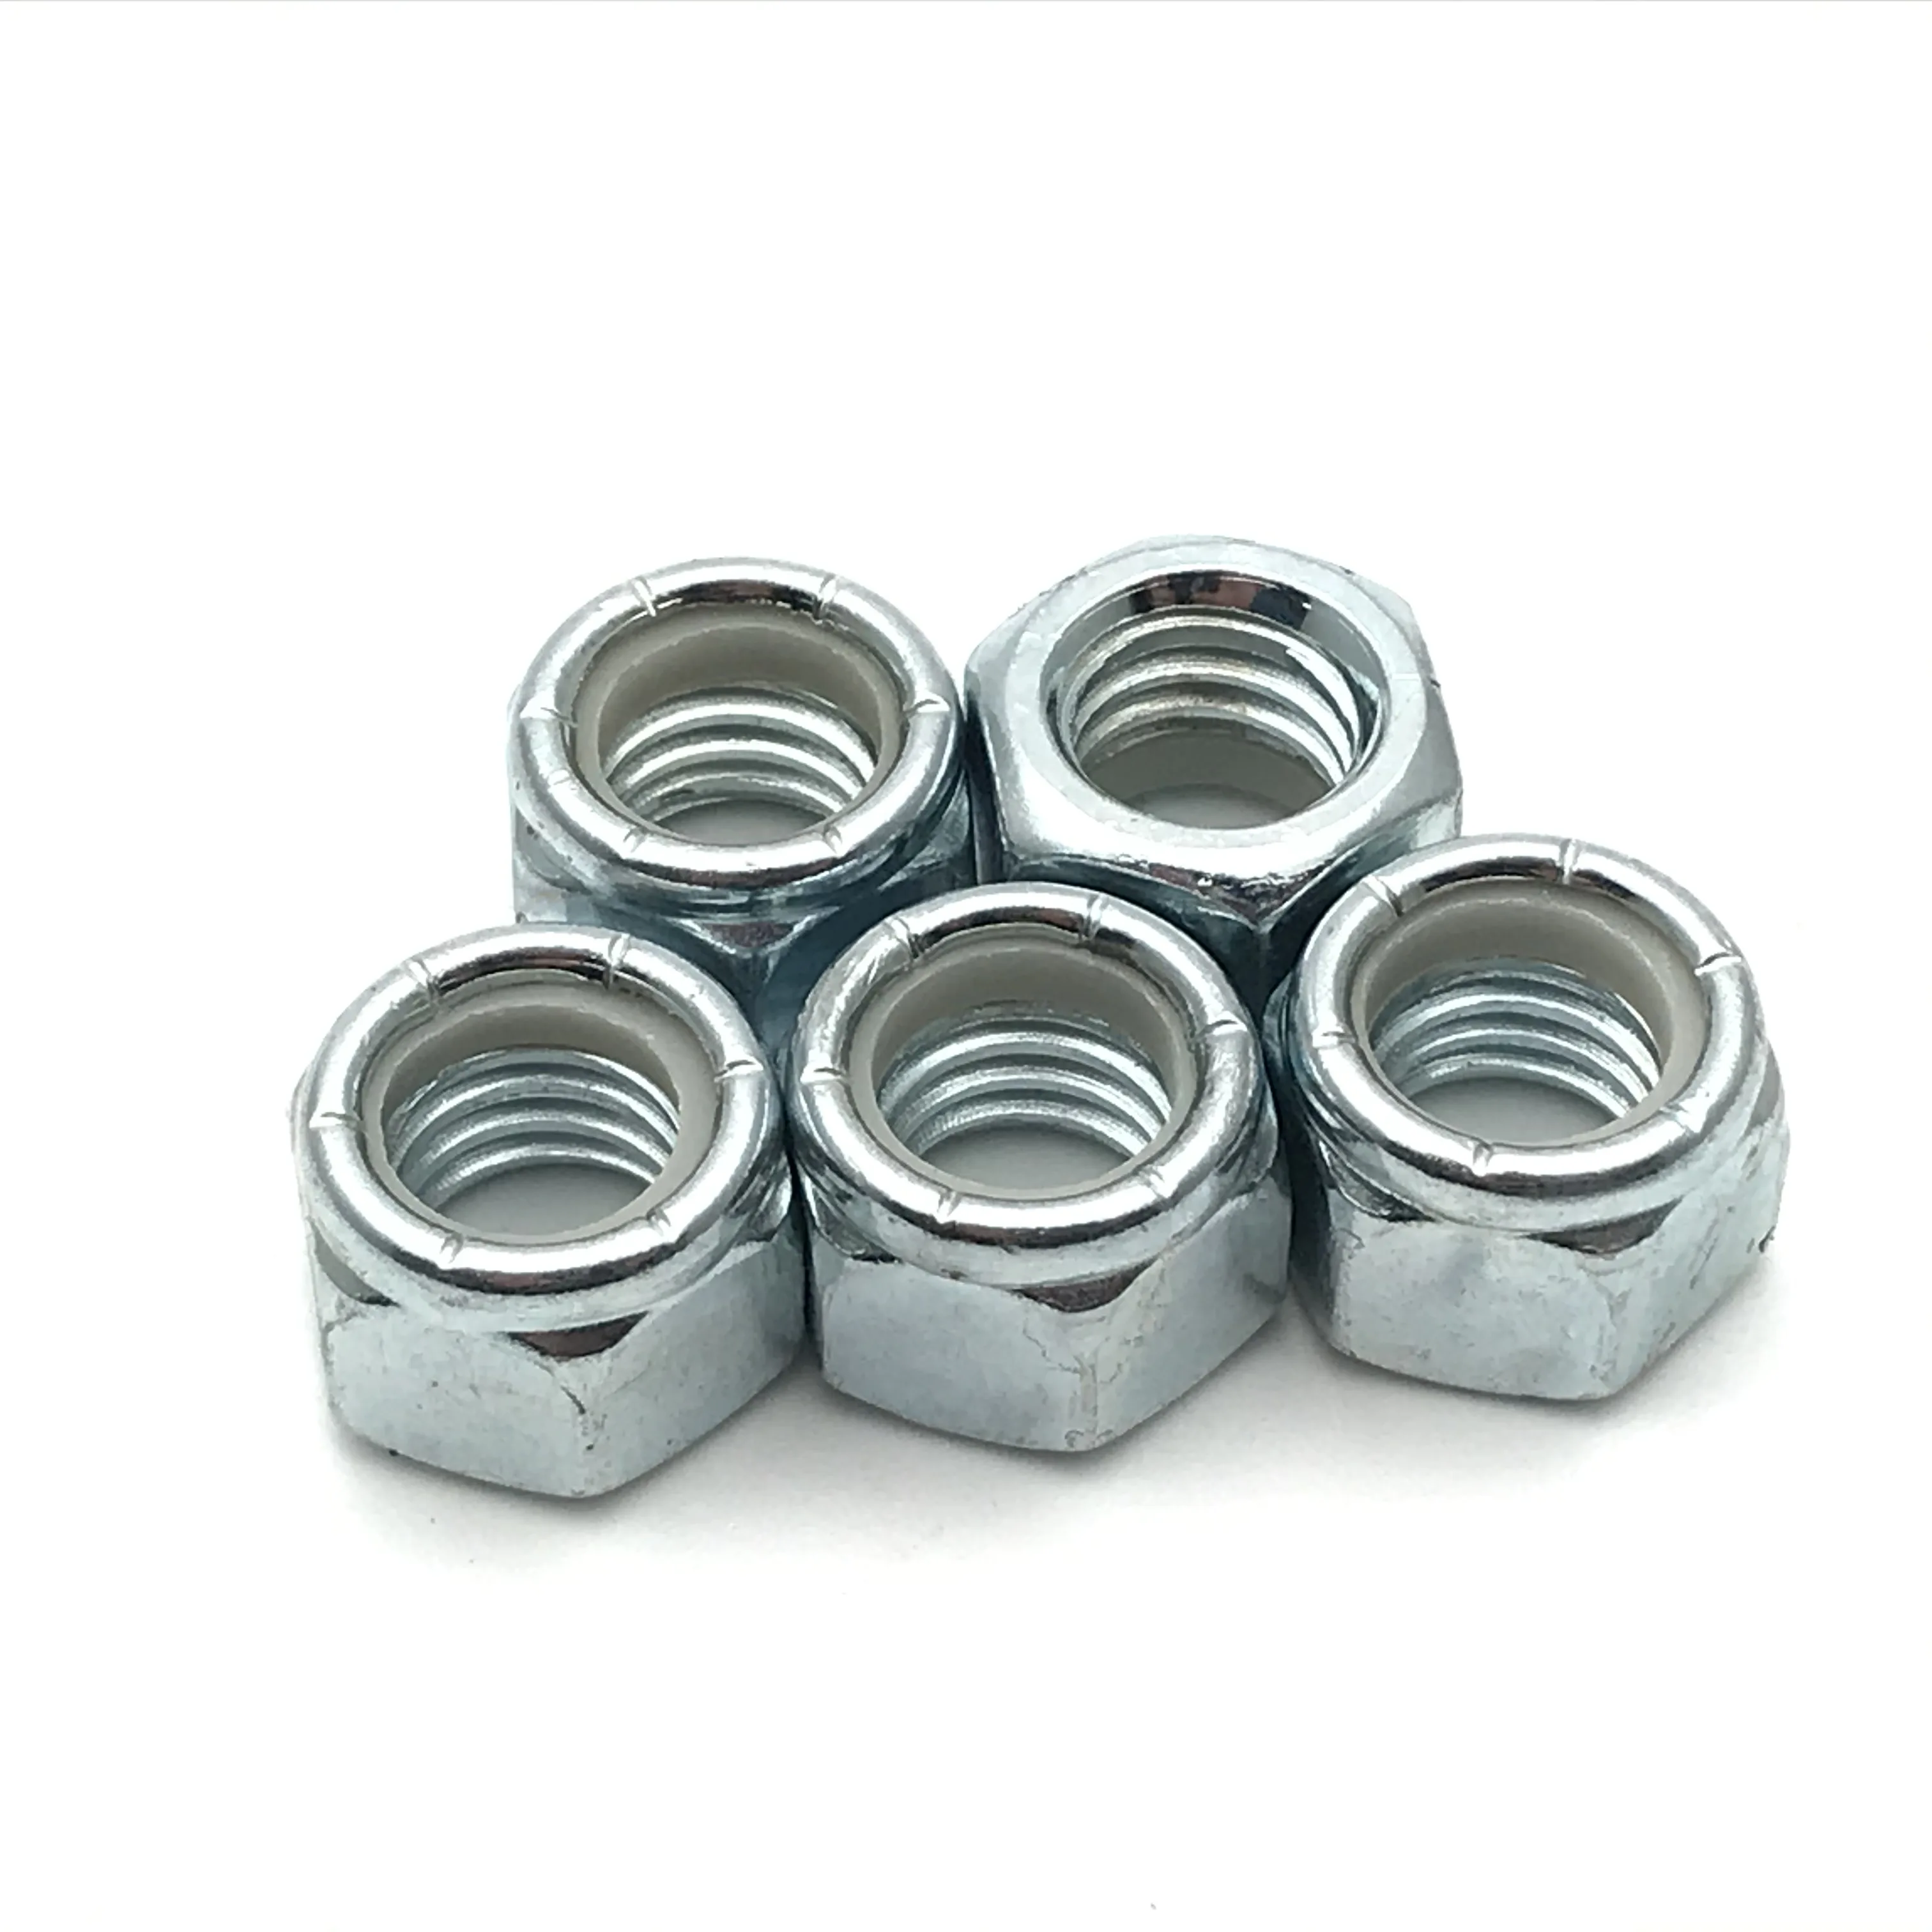 M2 Thread 304 Stainless Steel Nylon Insert Lock Nuts Locking Hex Nuts 20-100Pcs 